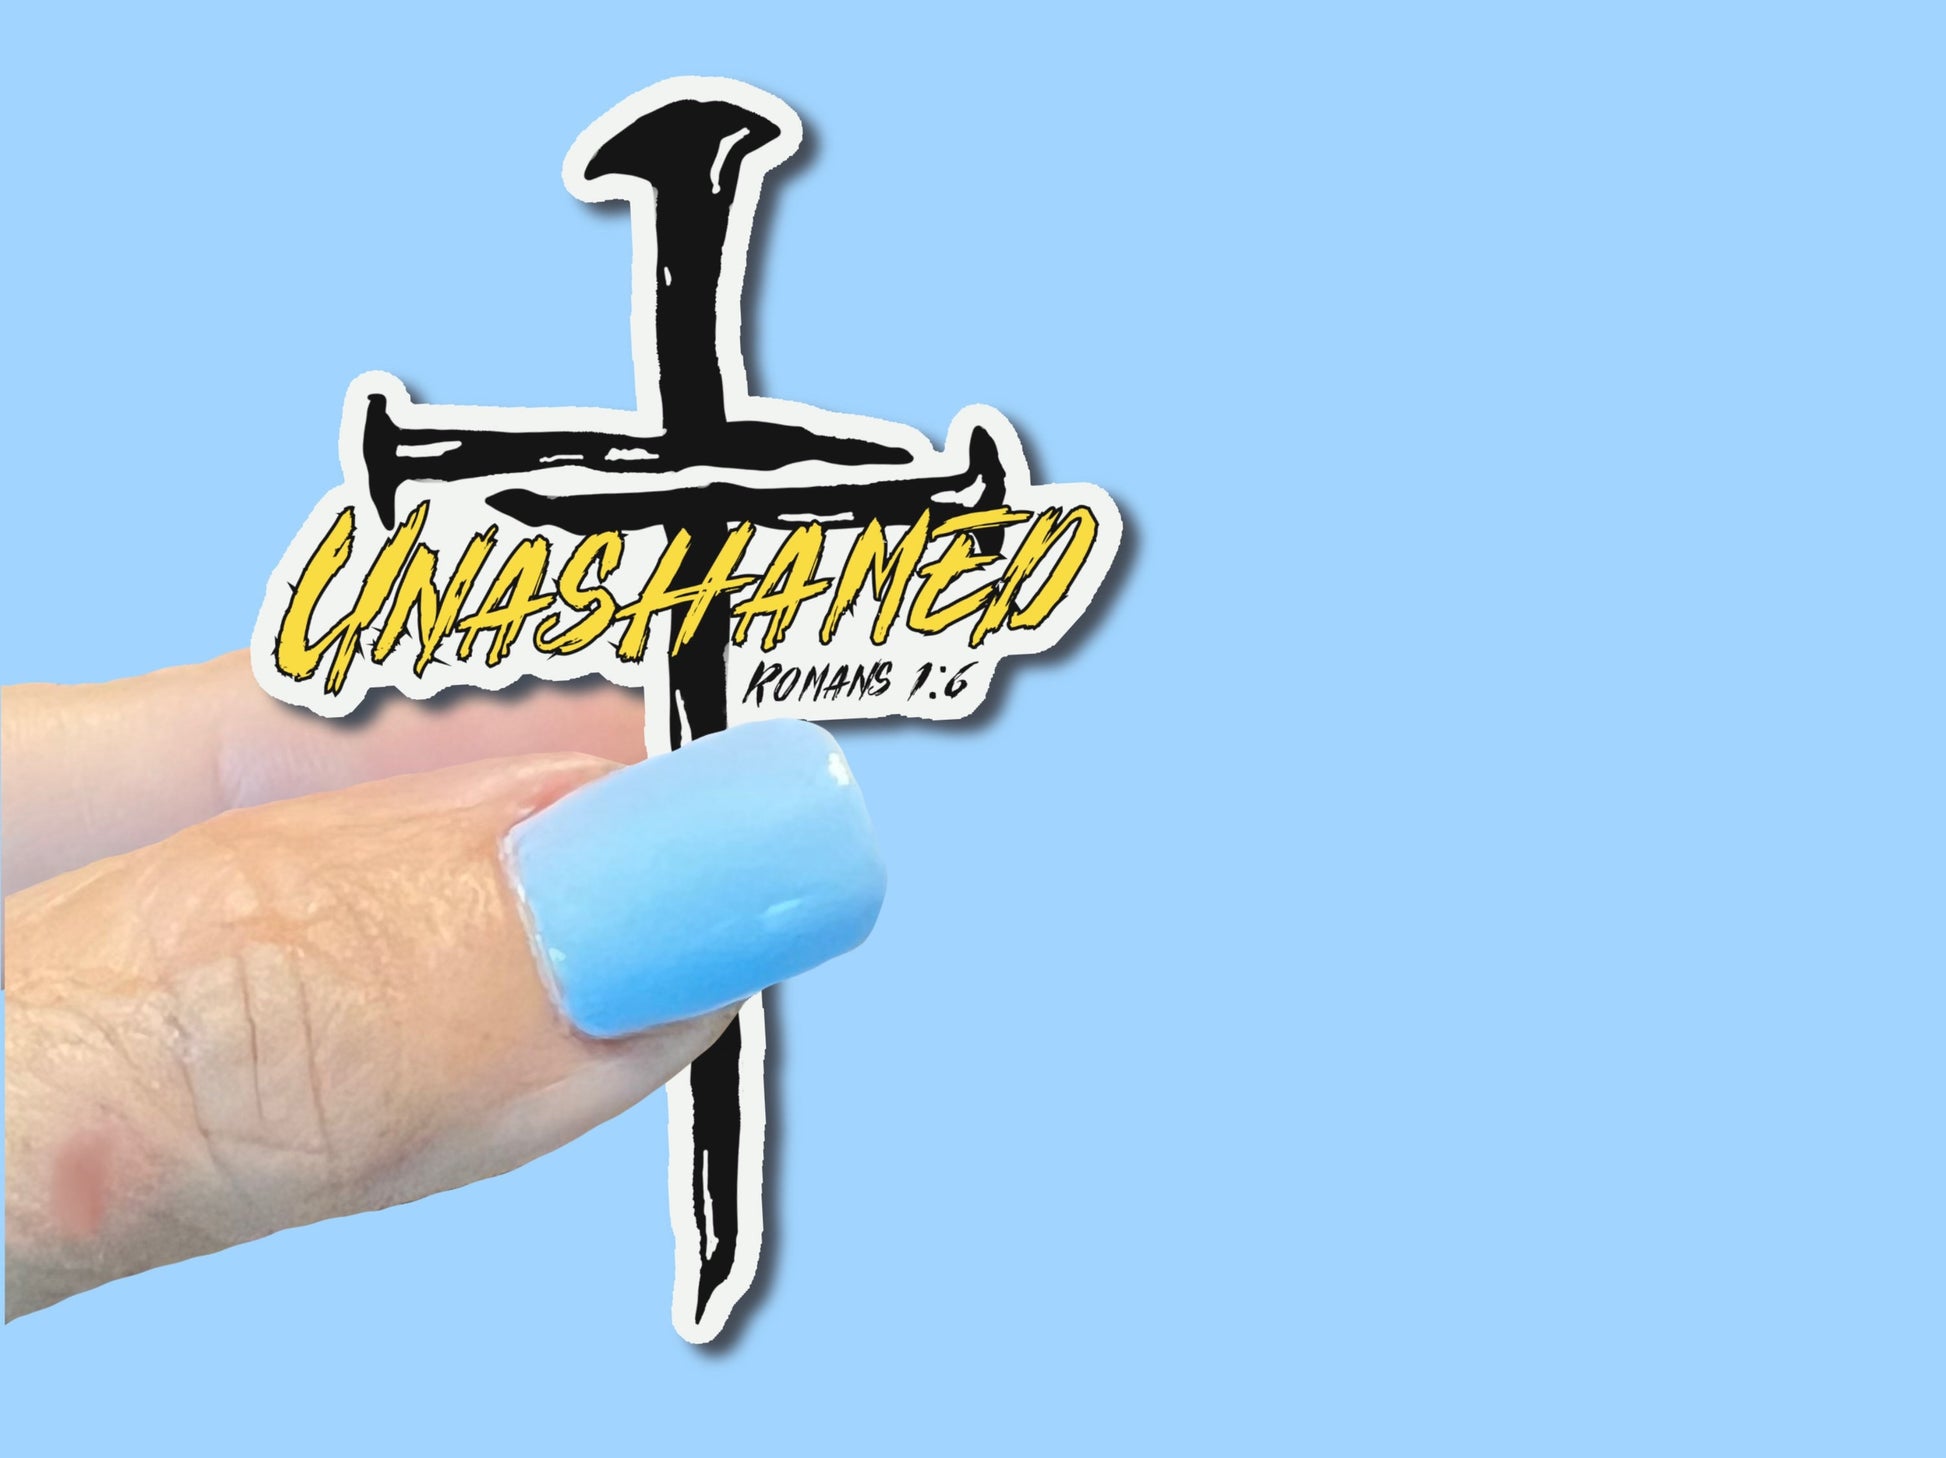 Unashamed - Romans 1:6 - 3 nail cross Christian Faith UV/ Waterproof Vinyl Sticker/ Decal- Choice of Size, Single or Bulk qty